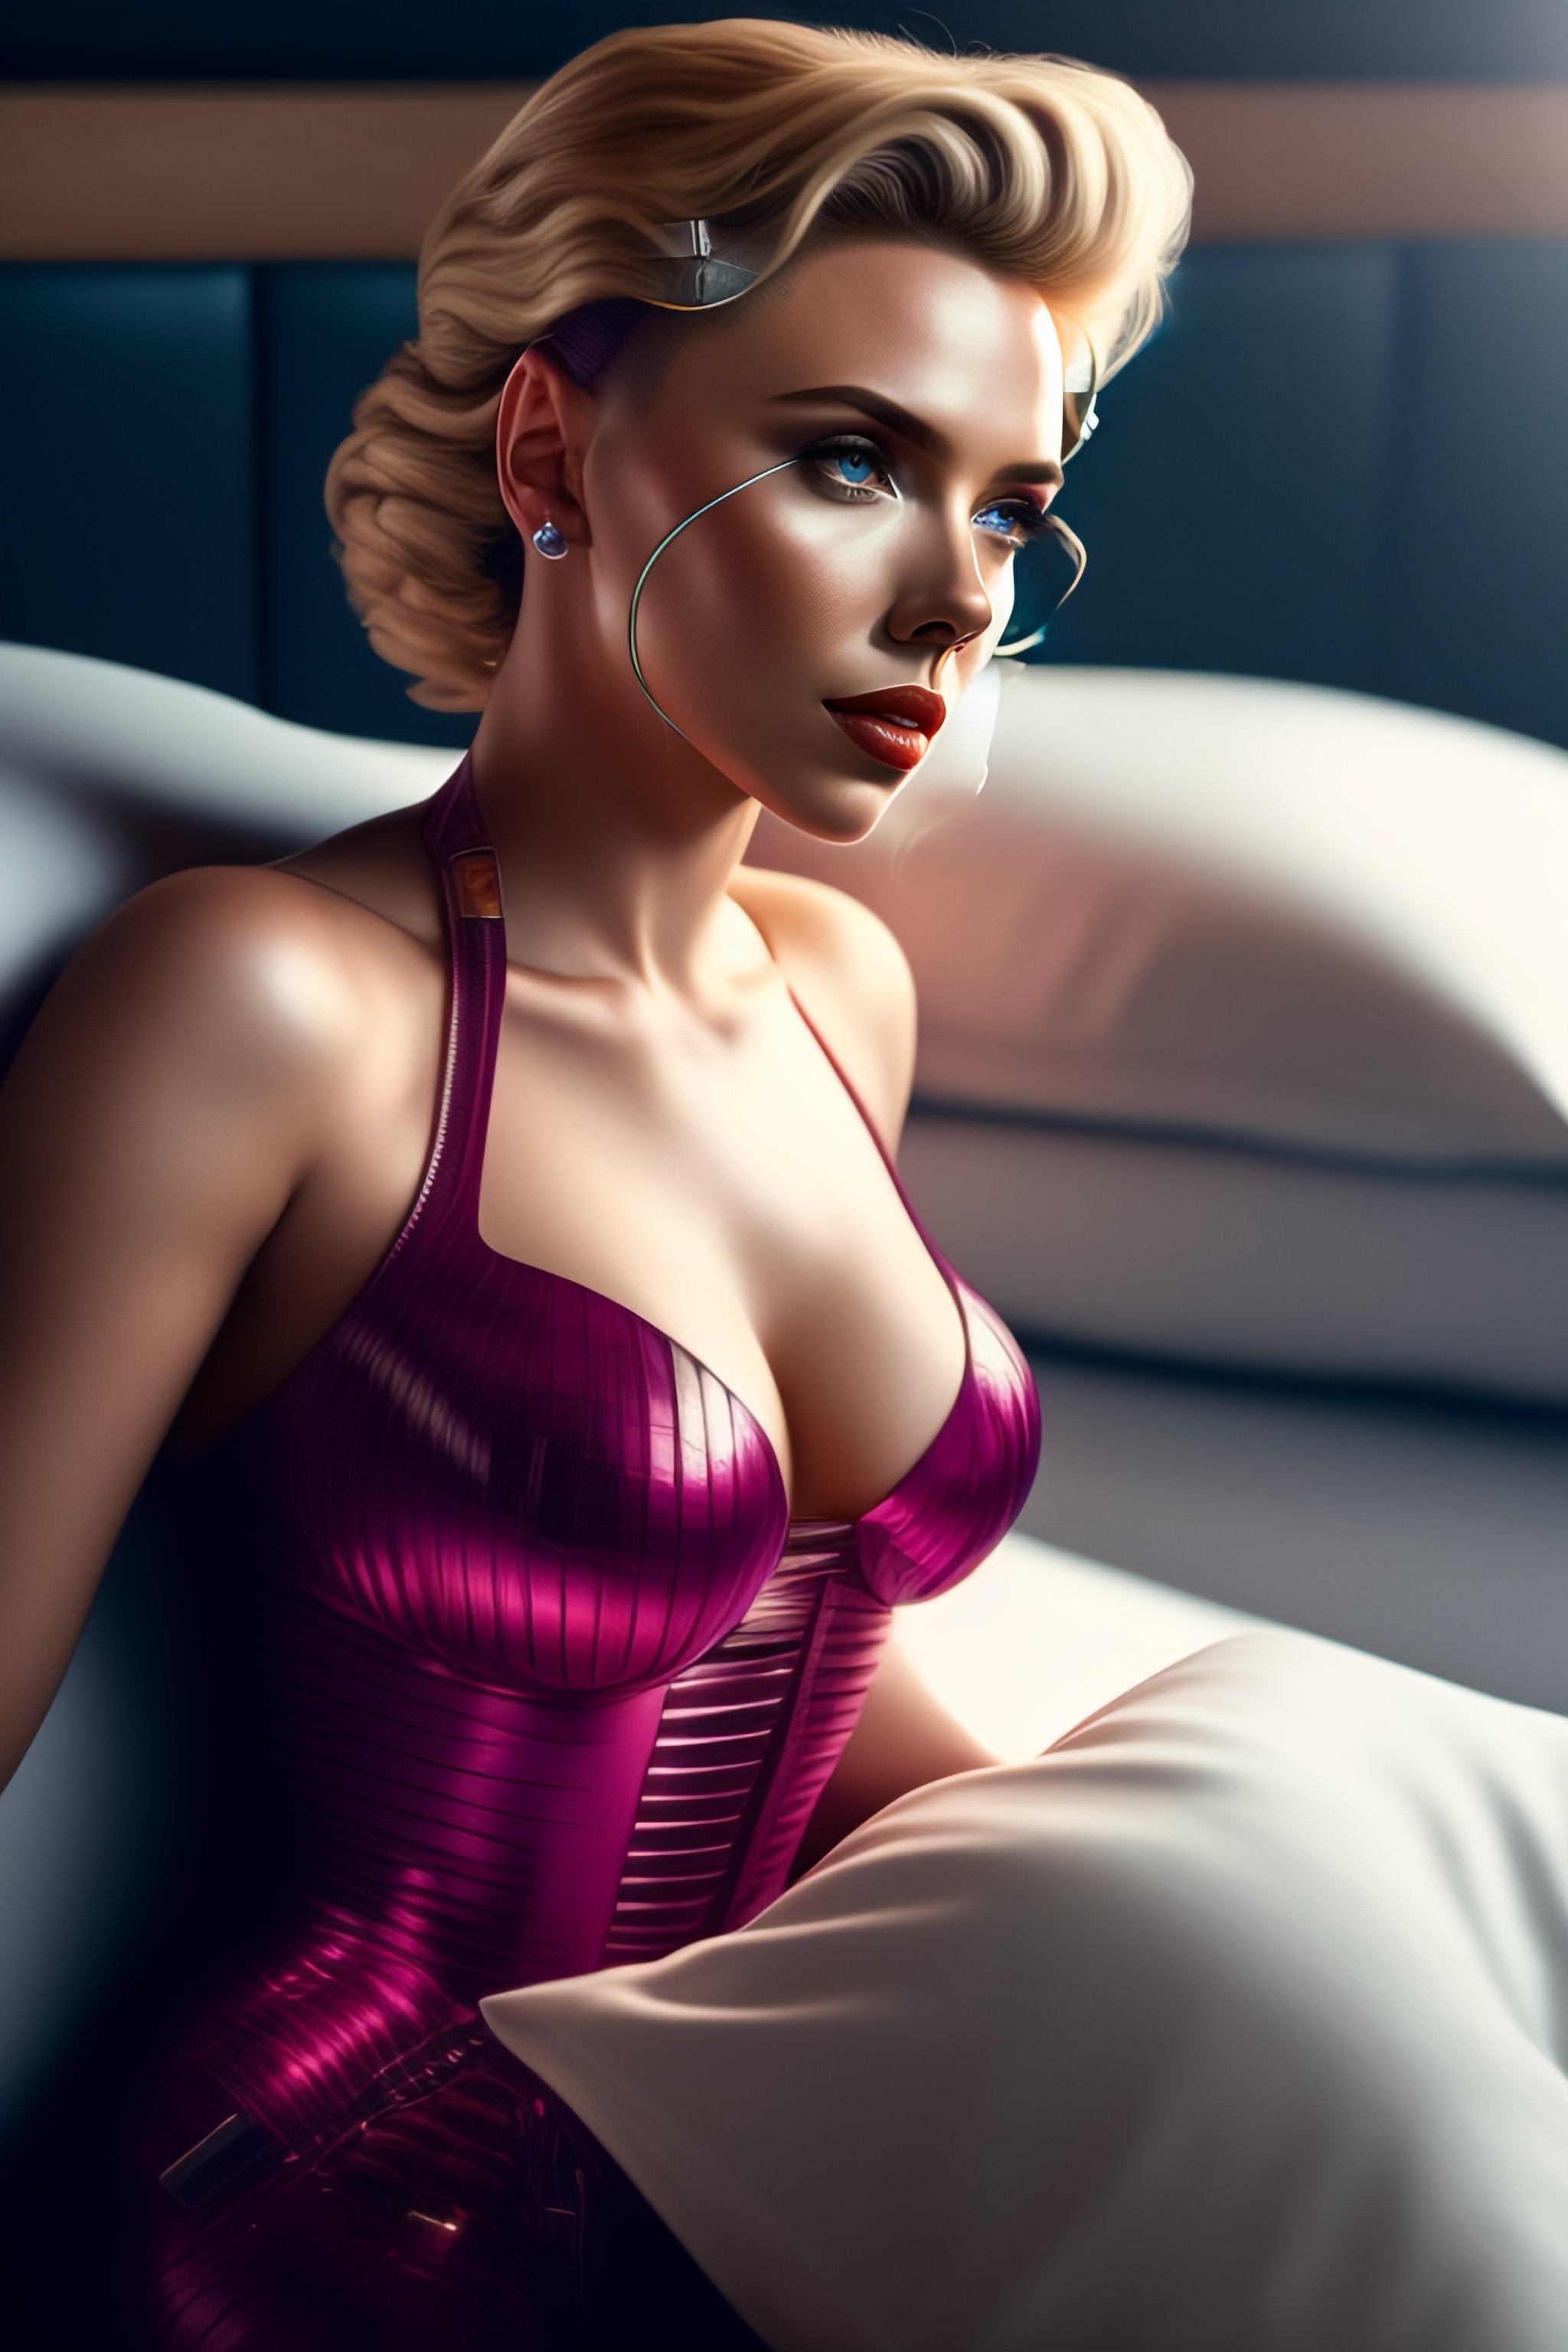 Lexica Scarlett Johansson Lying Bed One Arm Robotic Cables Plugin Her Cyberpunk Human